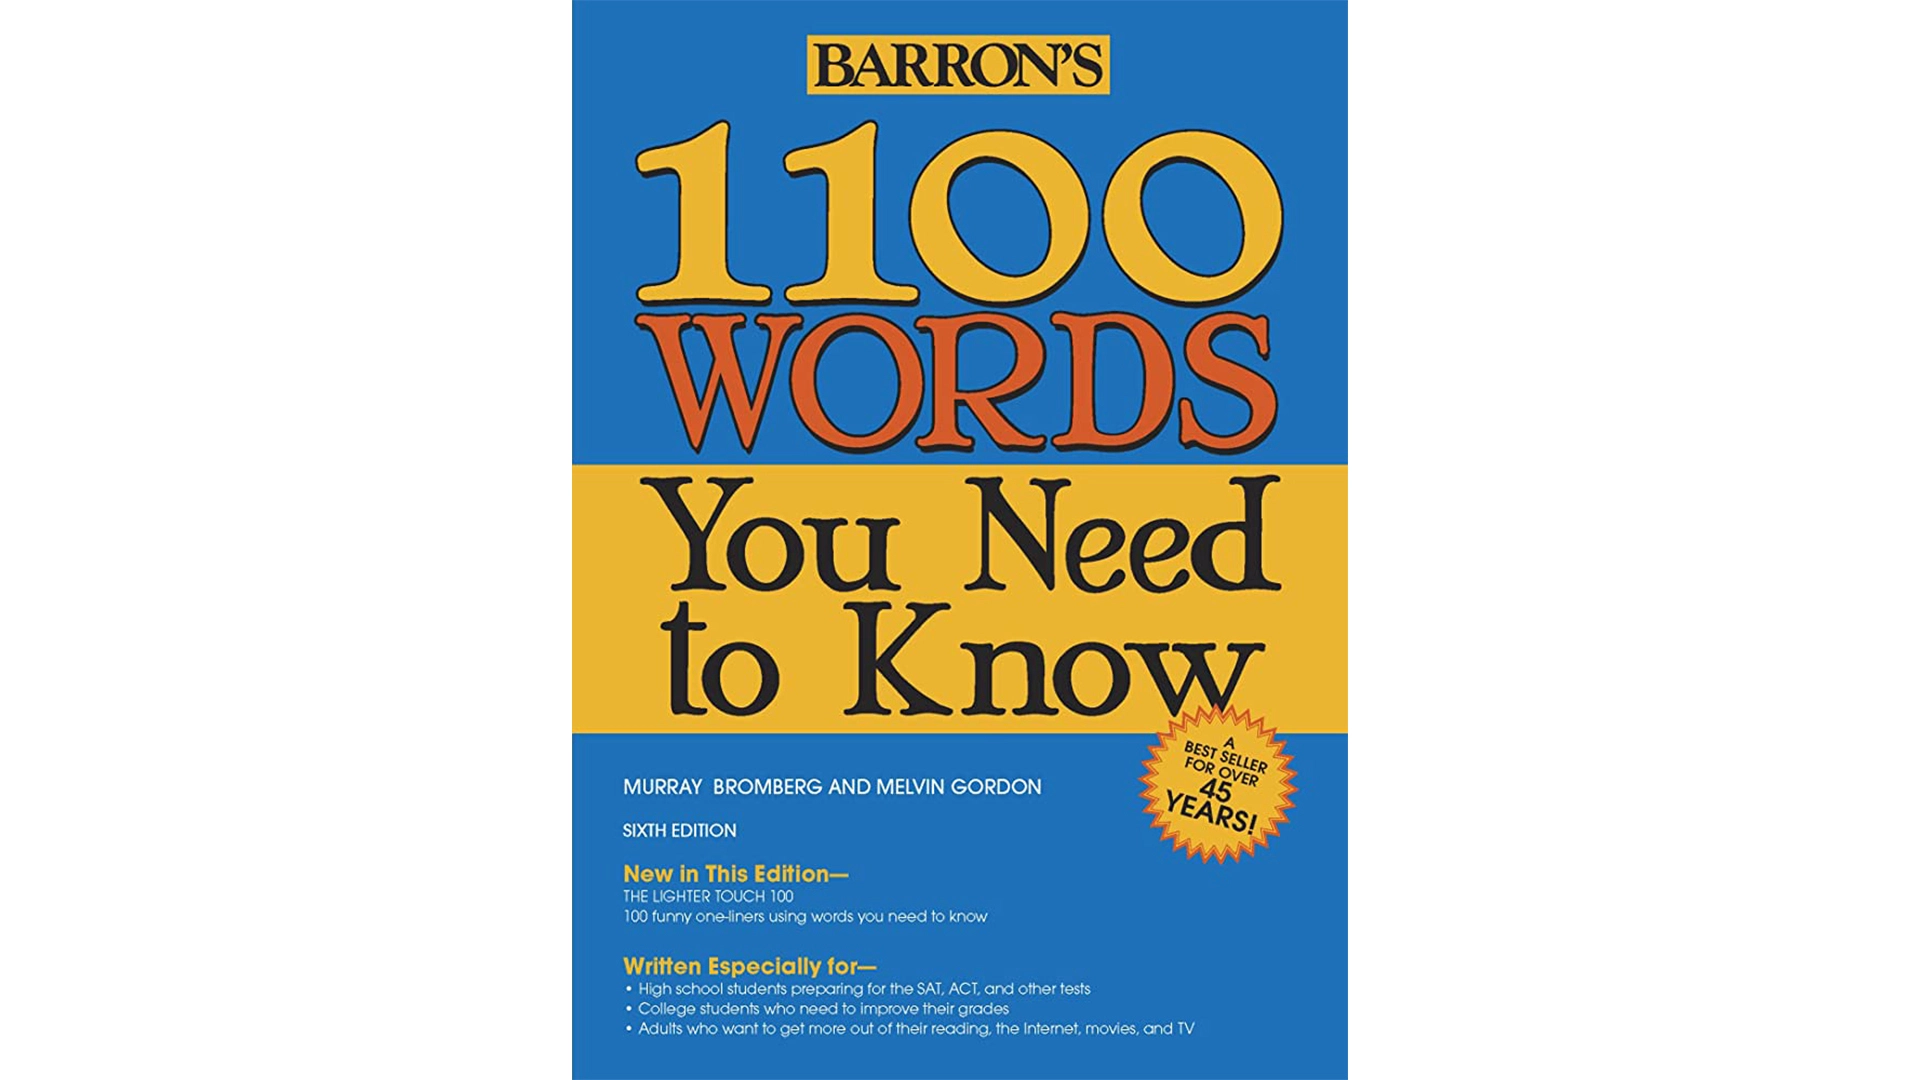 کتاب آموزش لغت انگلیسی 1100 لغت بارونز